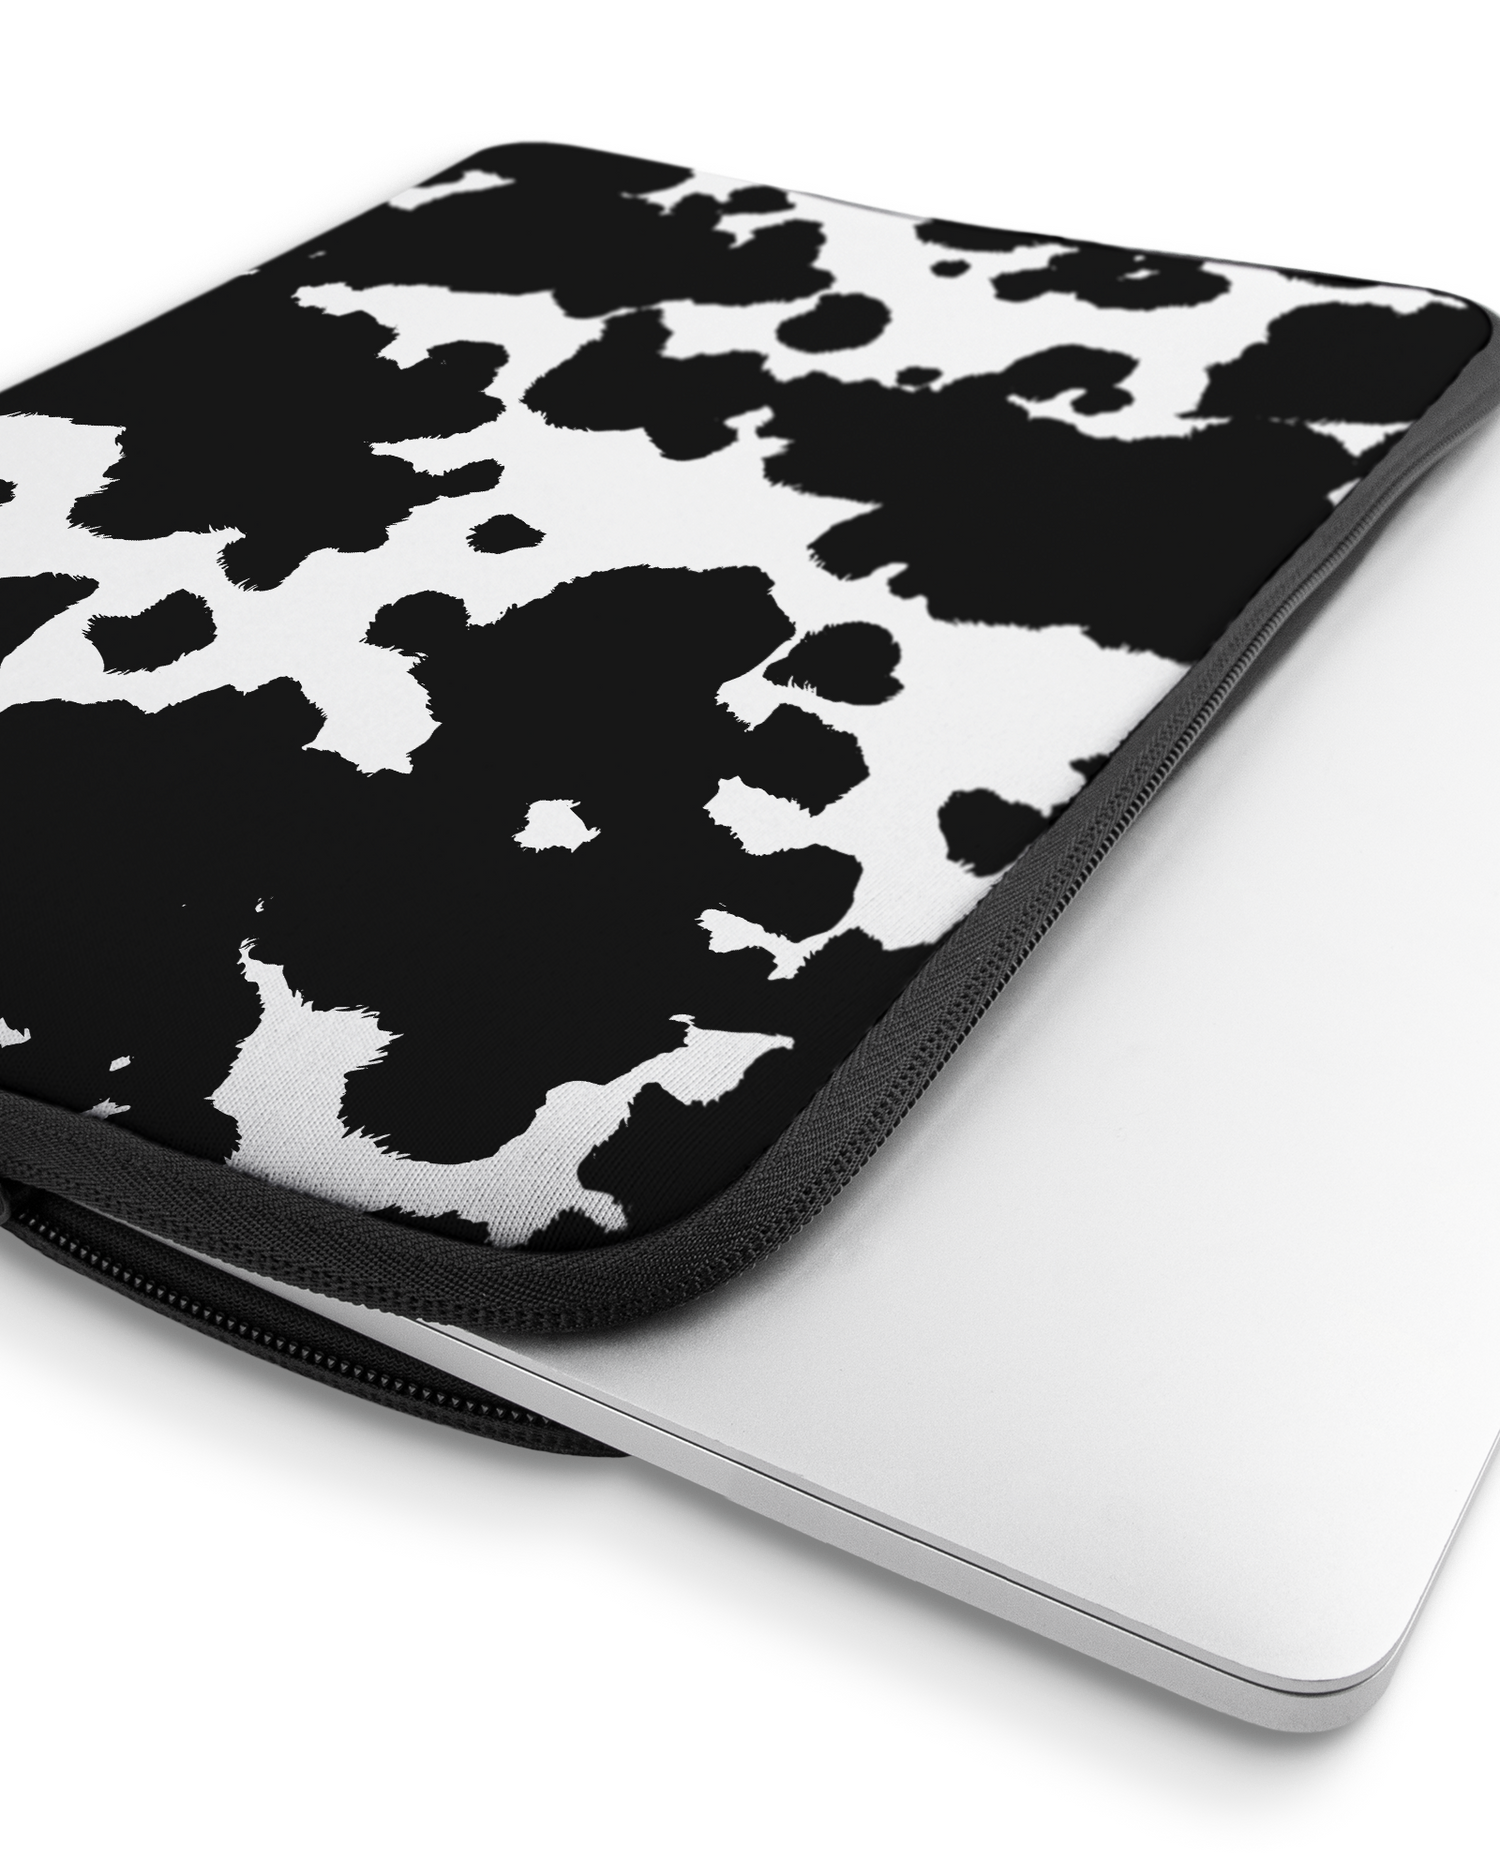 Cow Print Laptophülle 16 Zoll mit Gerät im Inneren